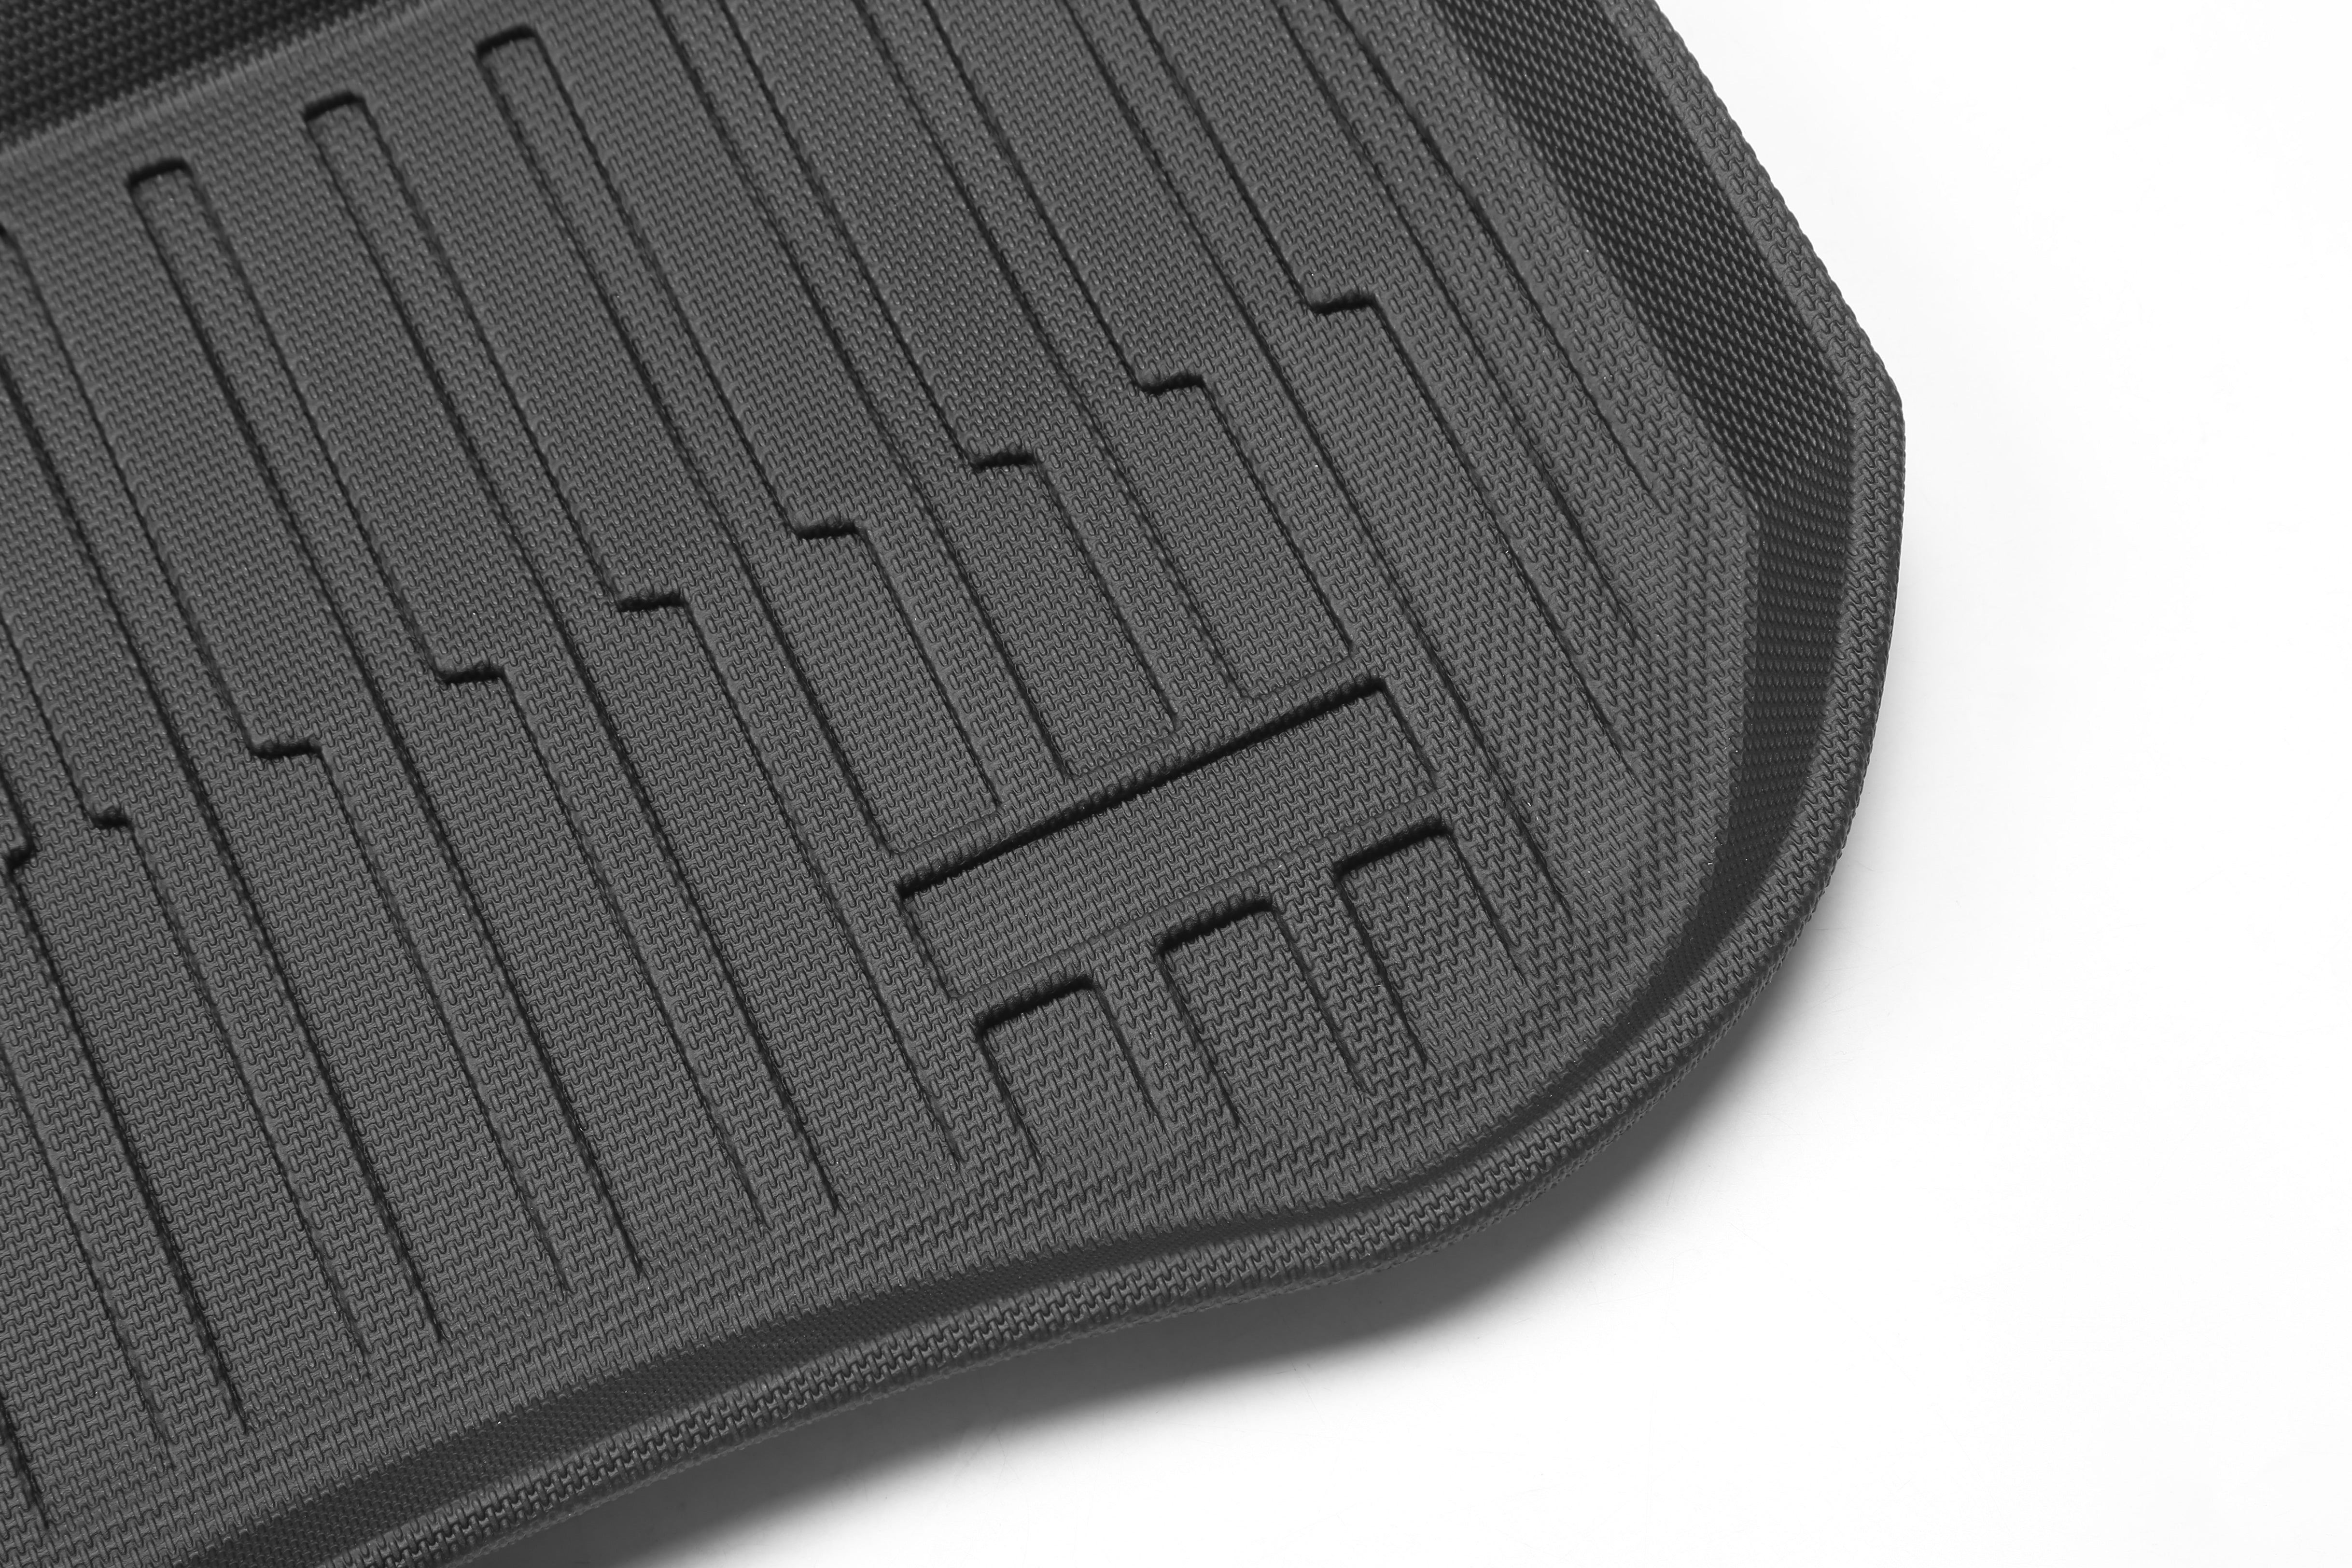 Tesla Model 3 rubber mats V3 5-piece complete set of floor mats, frunk and trunk